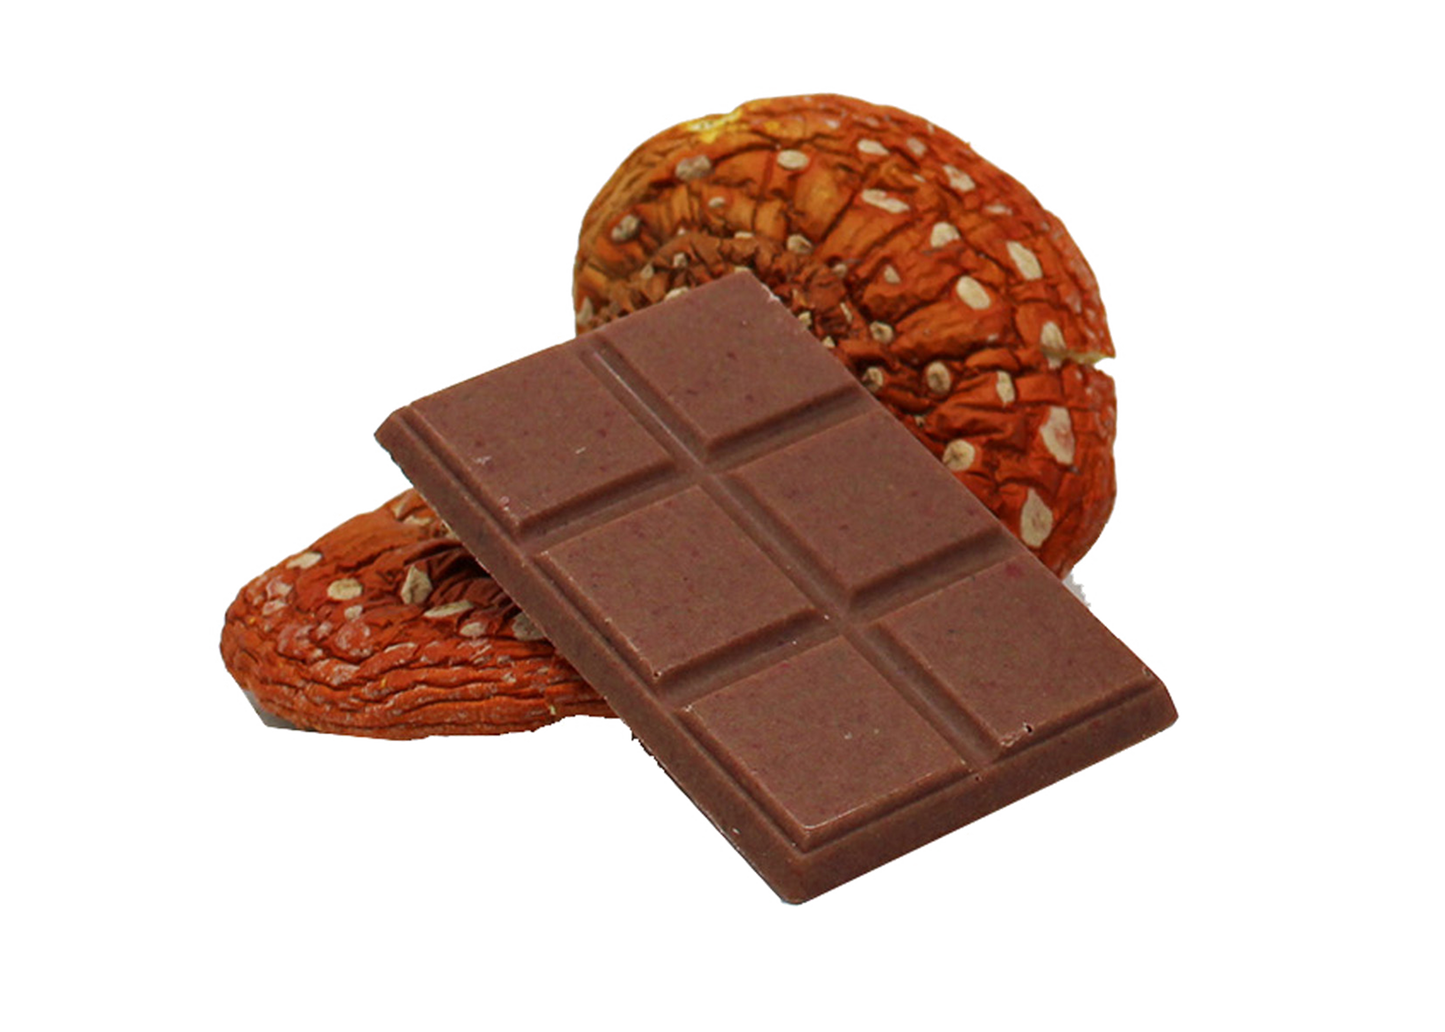 White Label Amanita Muscaria Chocolate